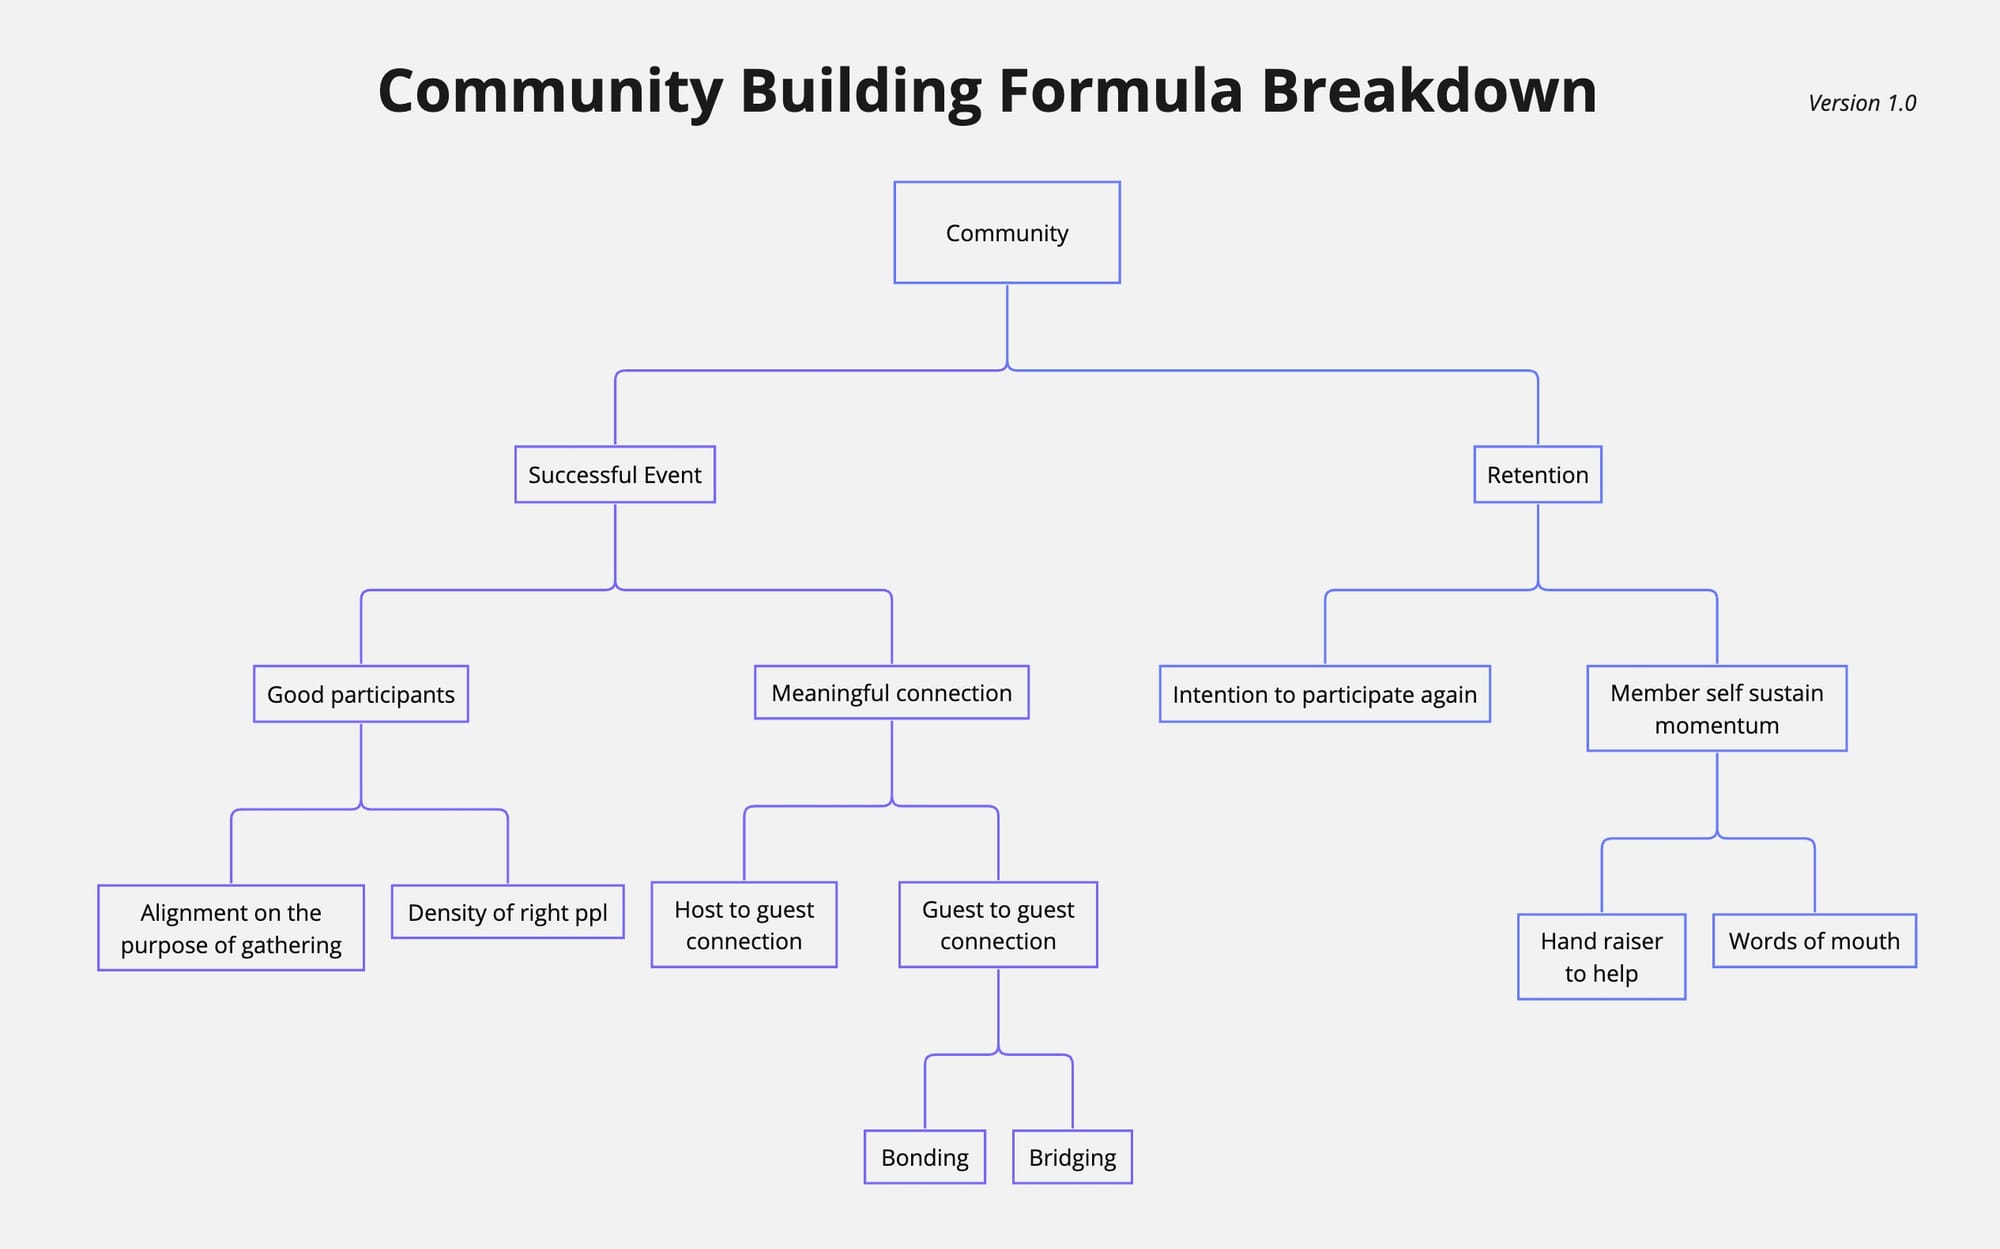 Community Building Framework v1.0 - Key Components of Community